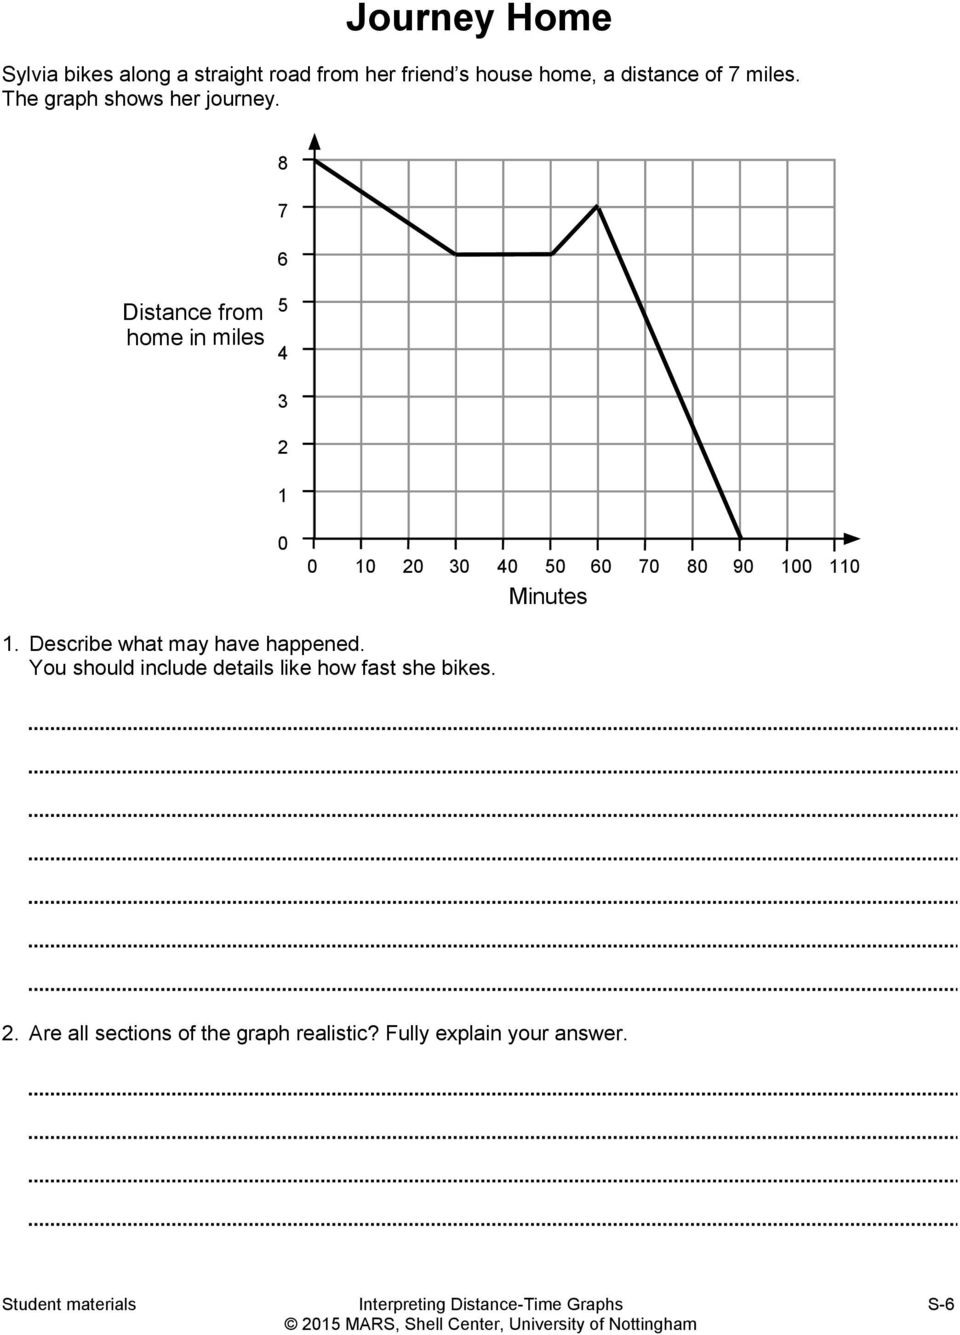 interpreting-graphs-worksheet-answers-ecoled